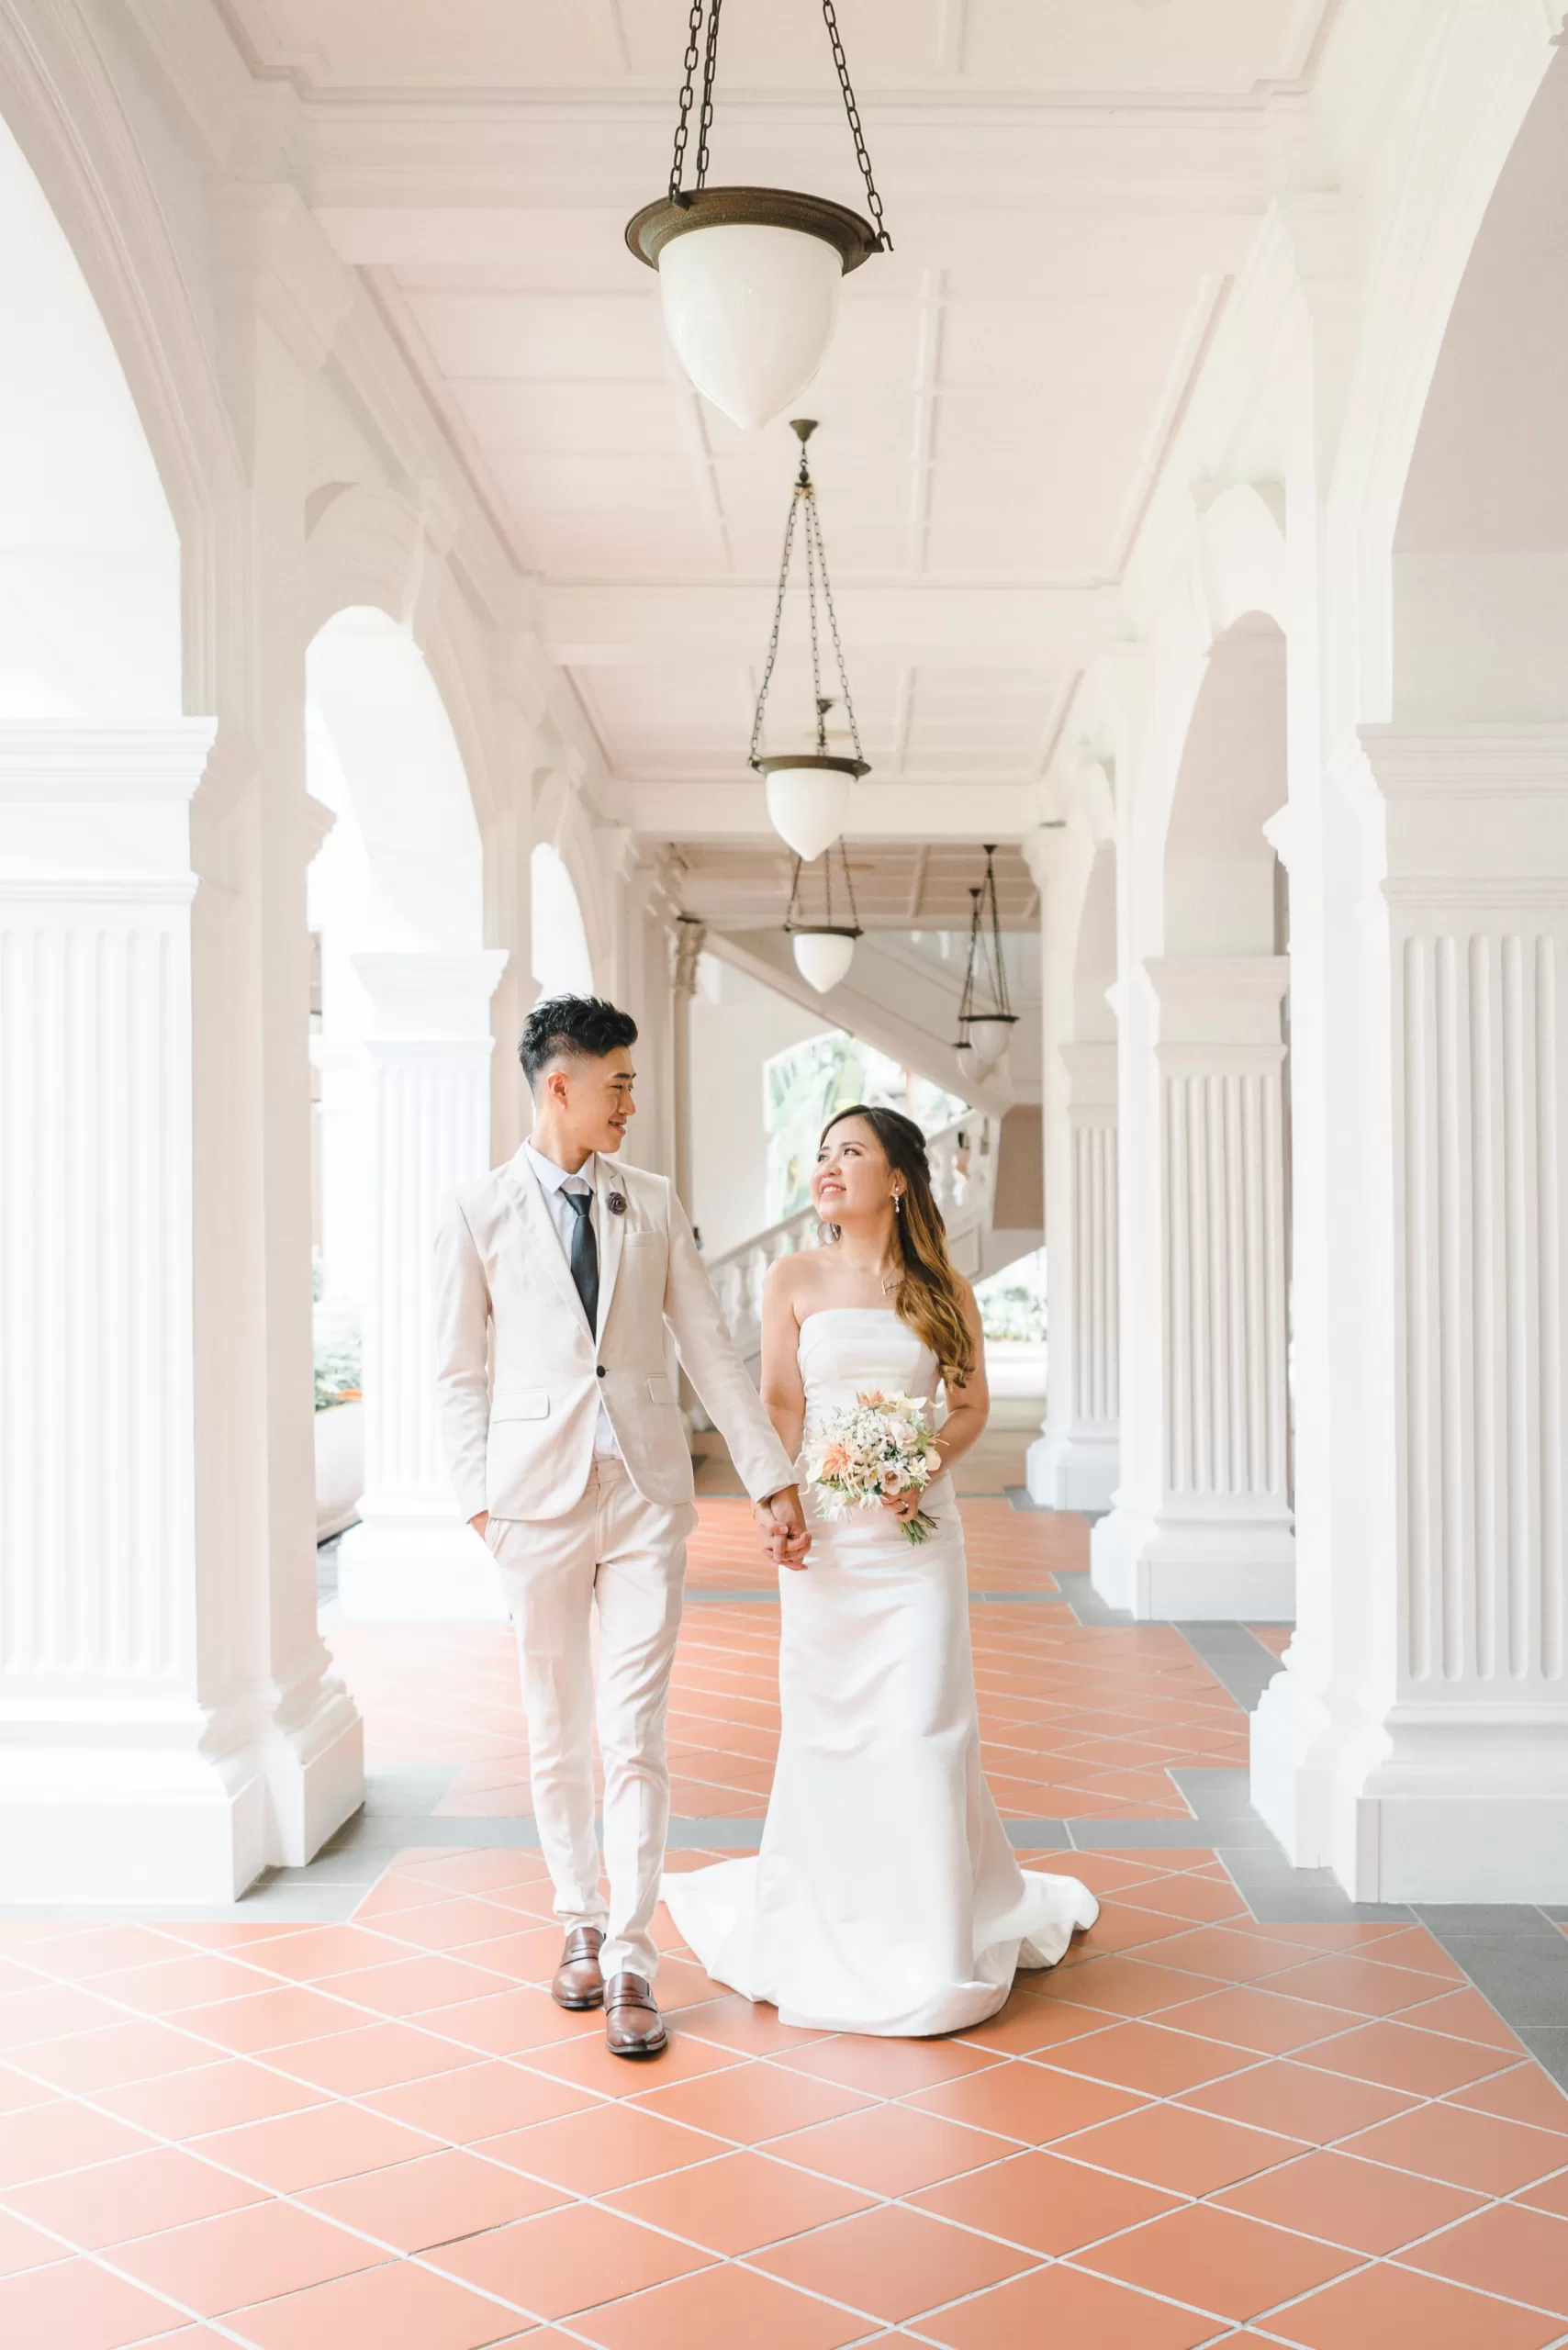 Pre-wedding photoshoot at Raffles Hotel, Singapore